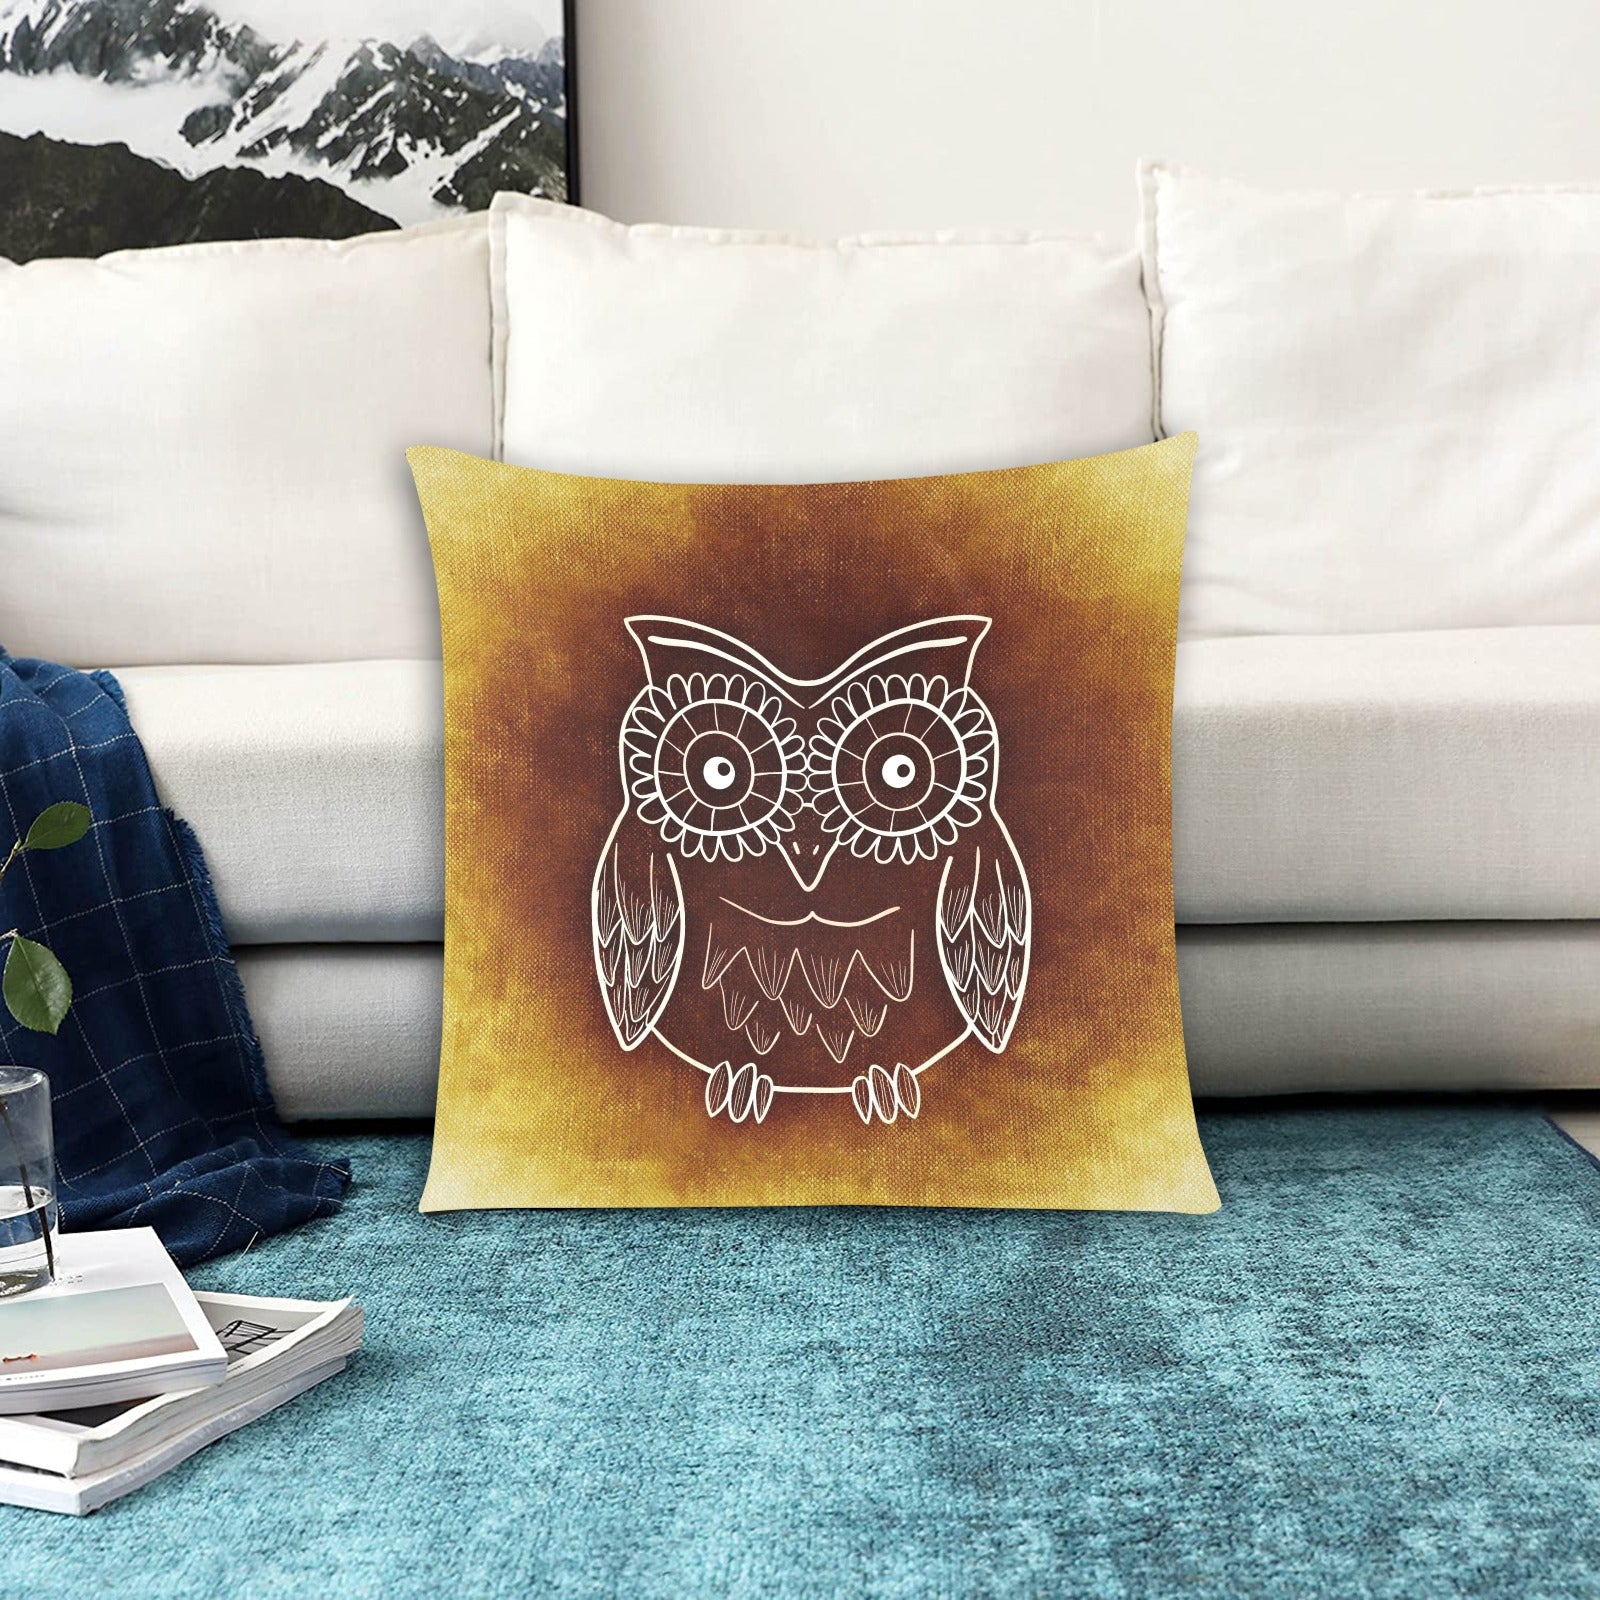 Owl Zippered Cushion Cover 20"x20" - Pillow Case - Zanlana Design and Home Decor